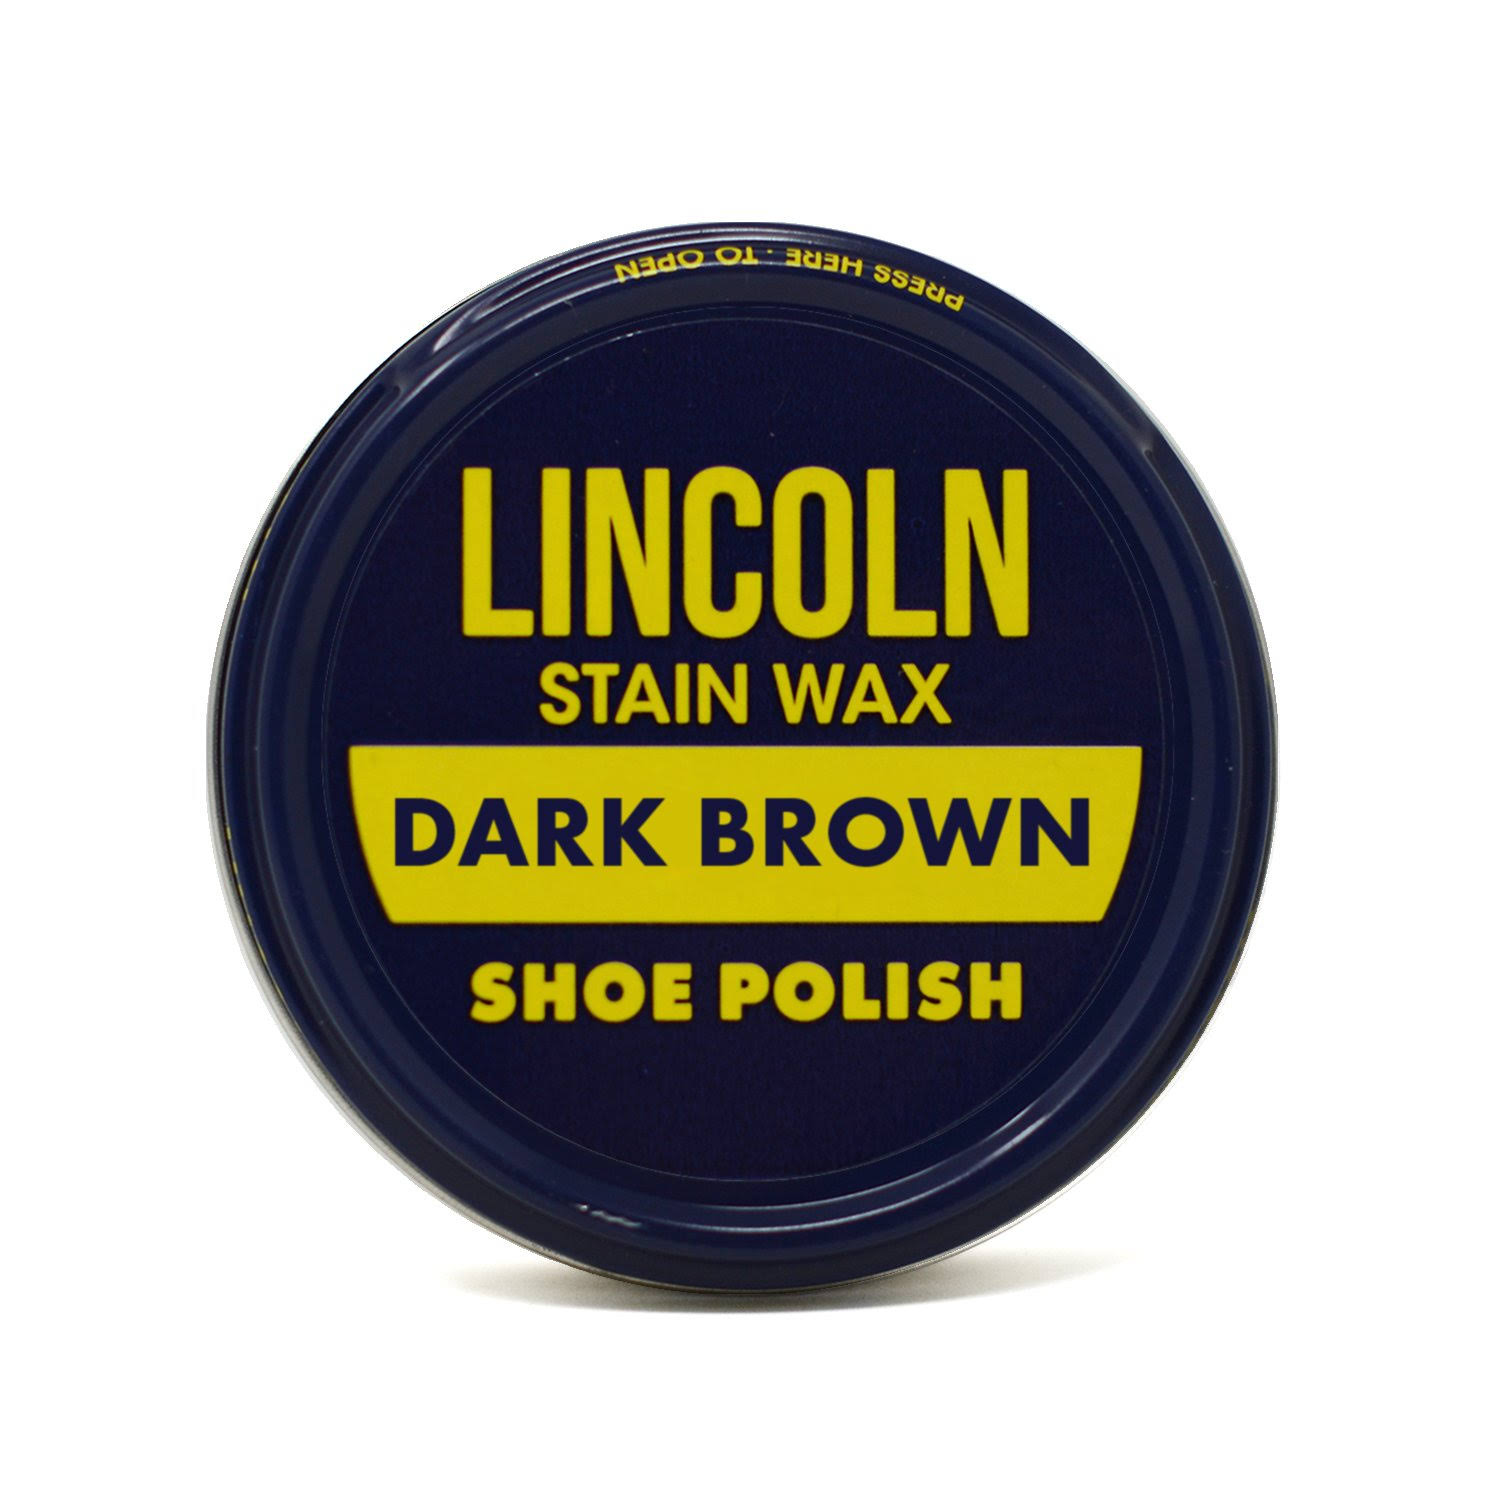 Lincoln Original Stain Wax Shoe Polish - Dark Brown